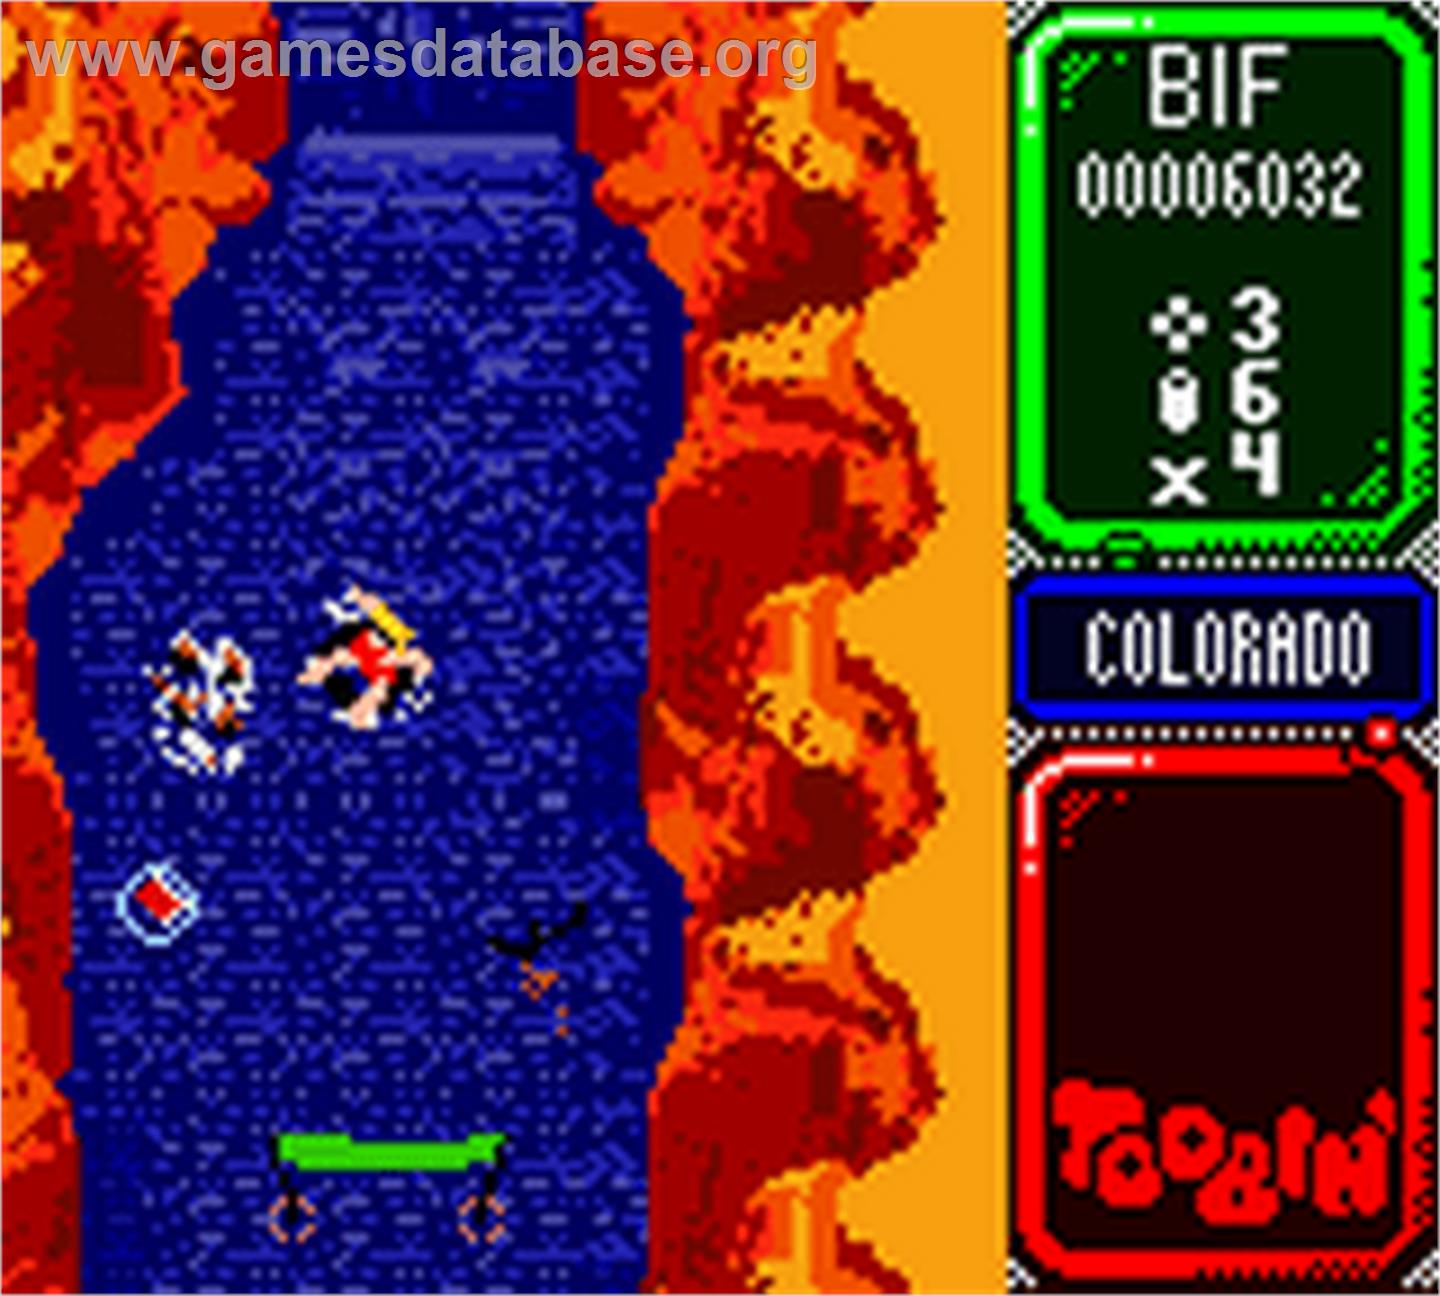 Toobin' - Nintendo Game Boy Color - Artwork - In Game